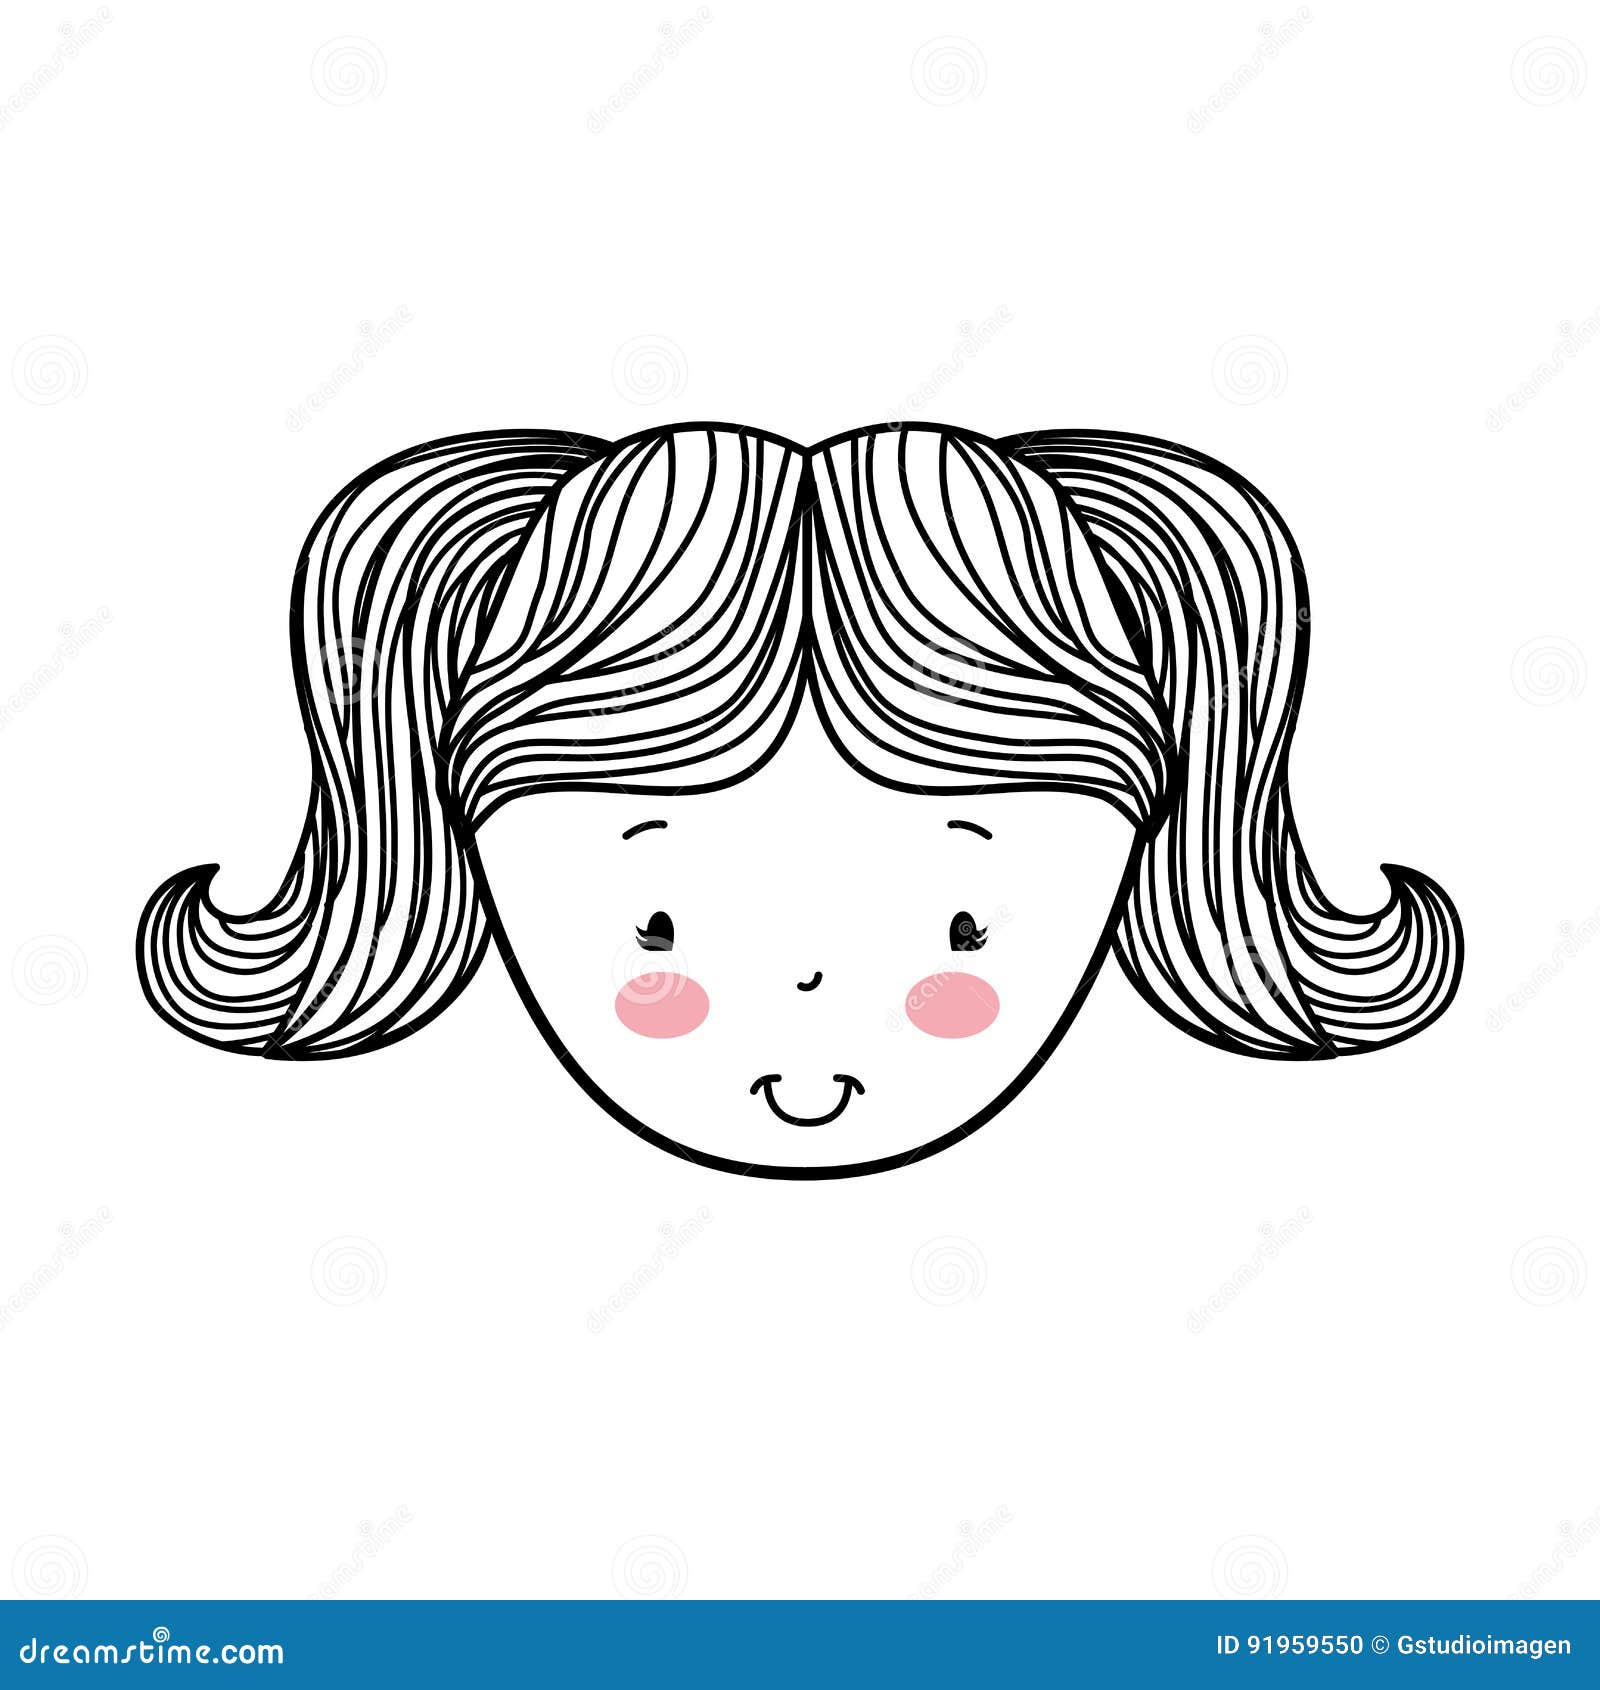 Cute little girl student stock vector. Illustration of cheerful - 91959550